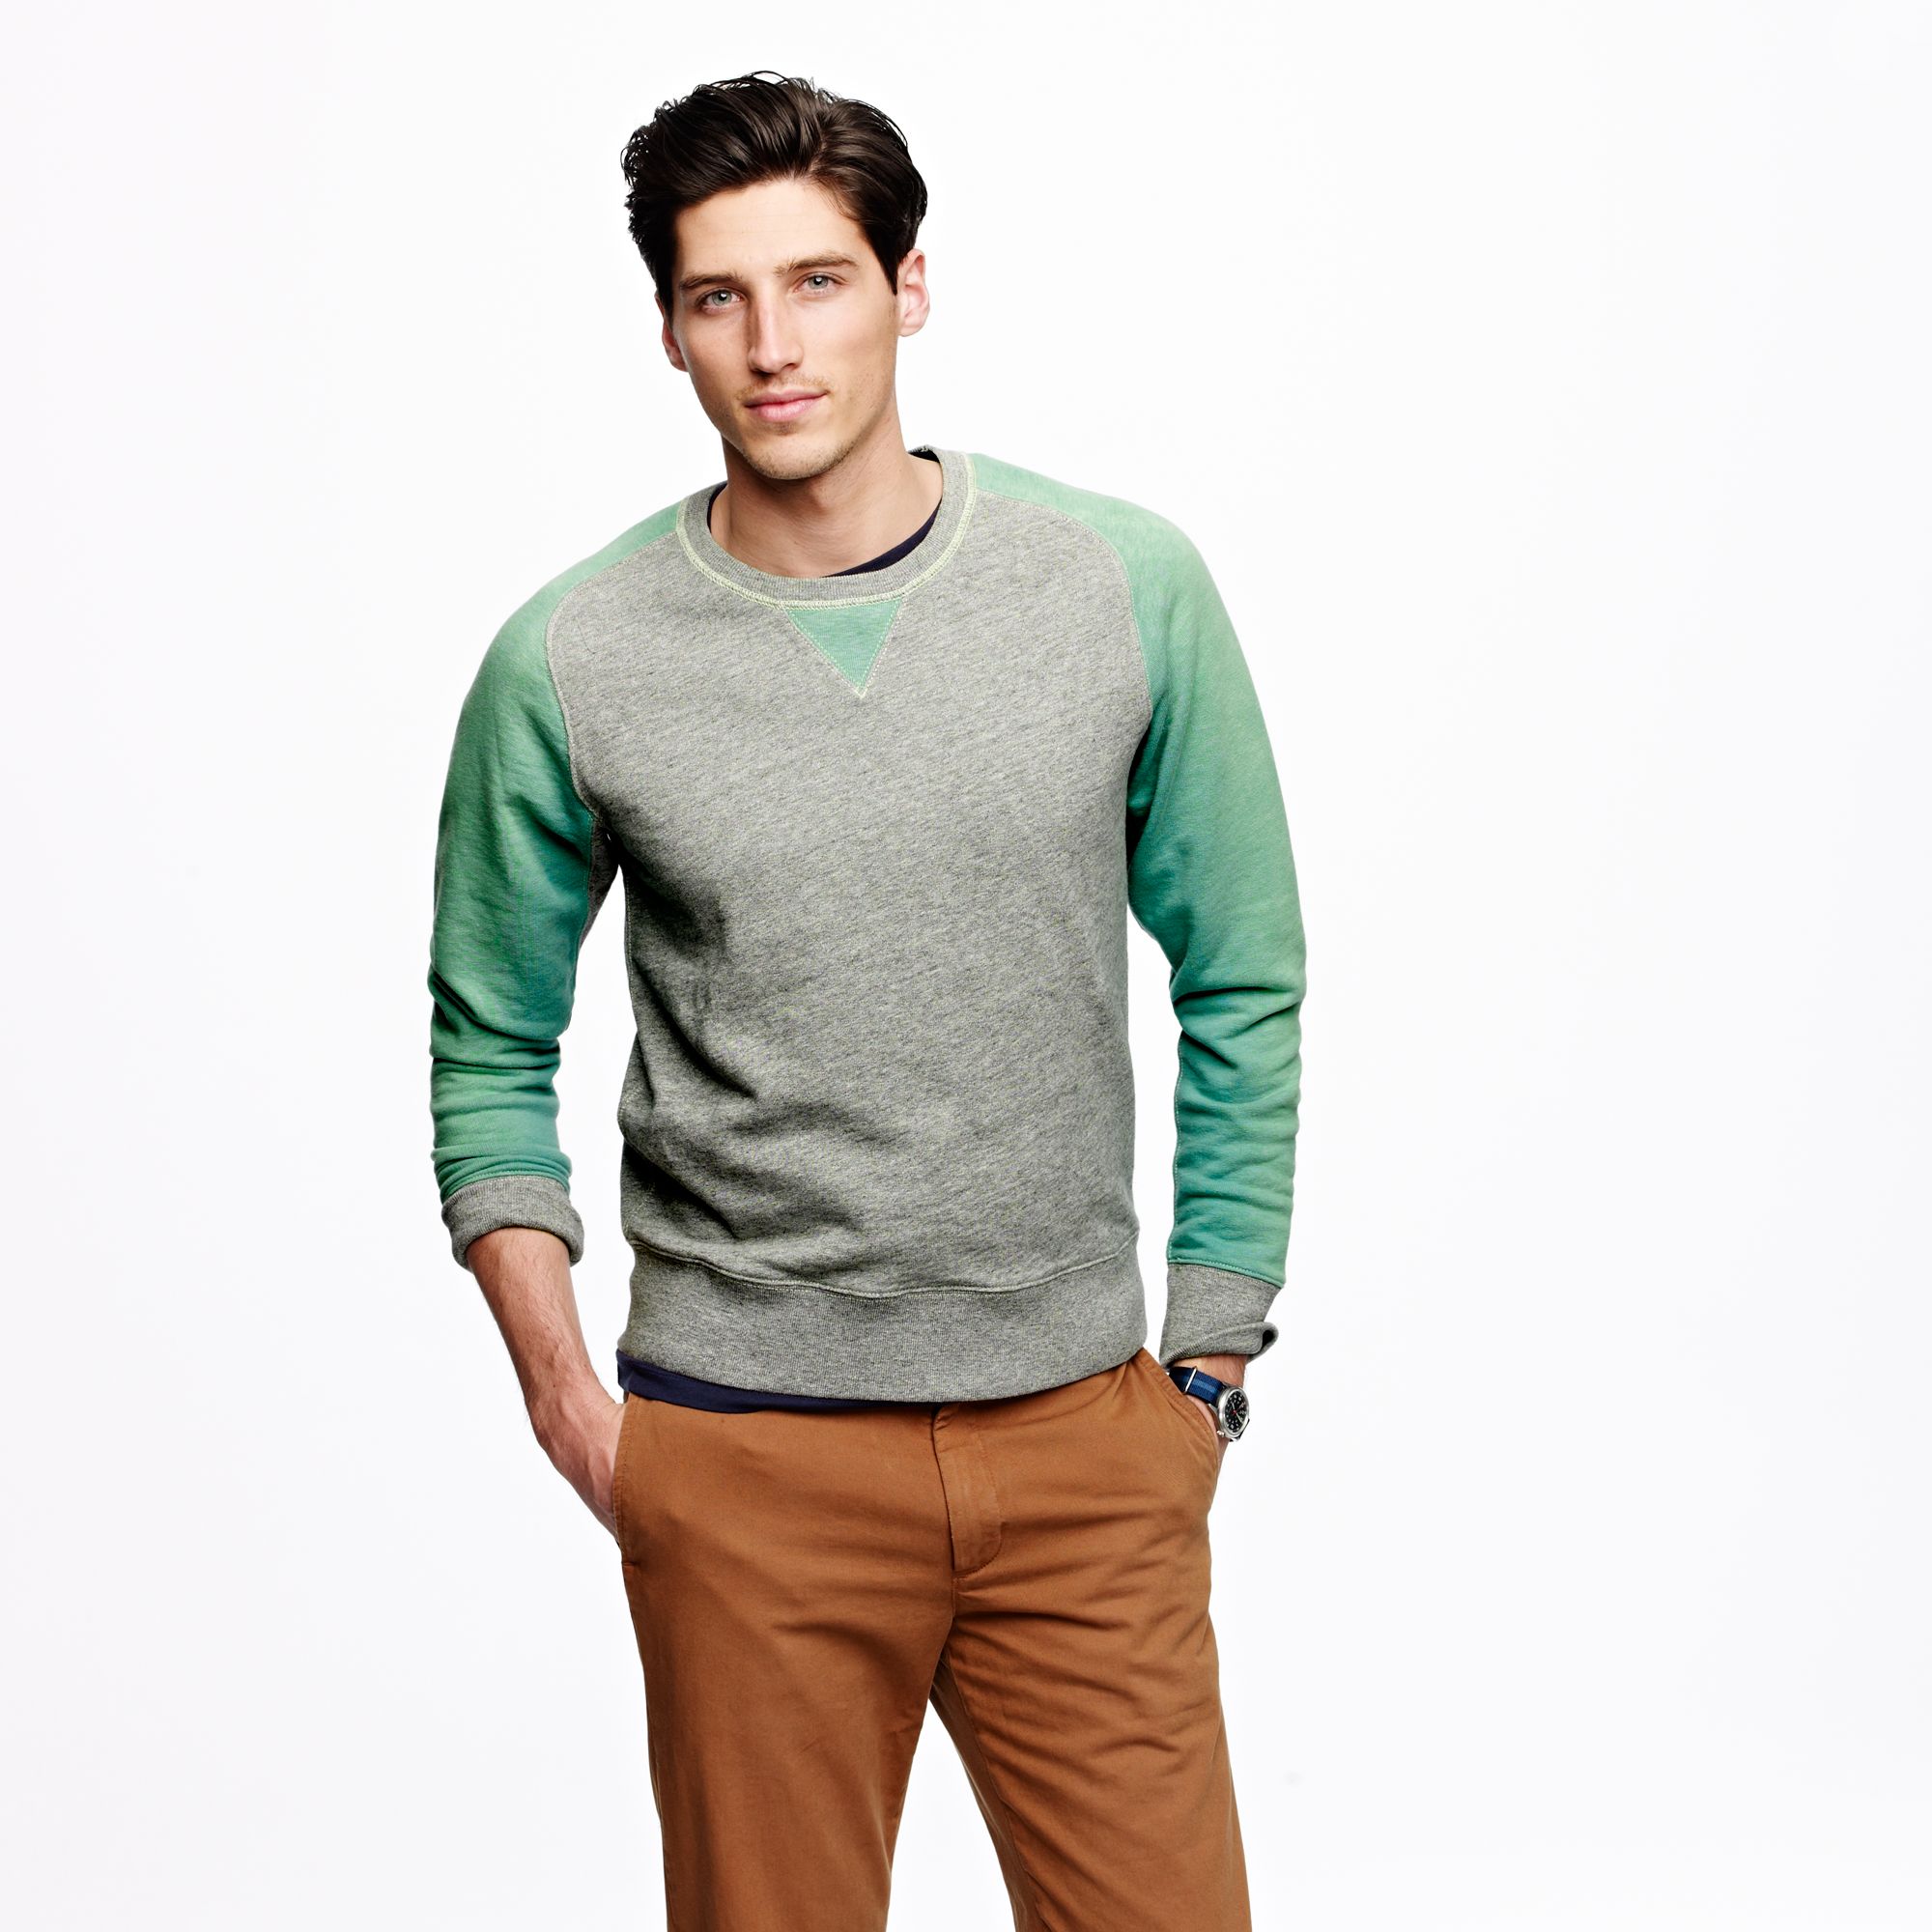 J.Crew Wallace Barnes Colorblock Raglan Sweatshirt in Green for Men - Lyst